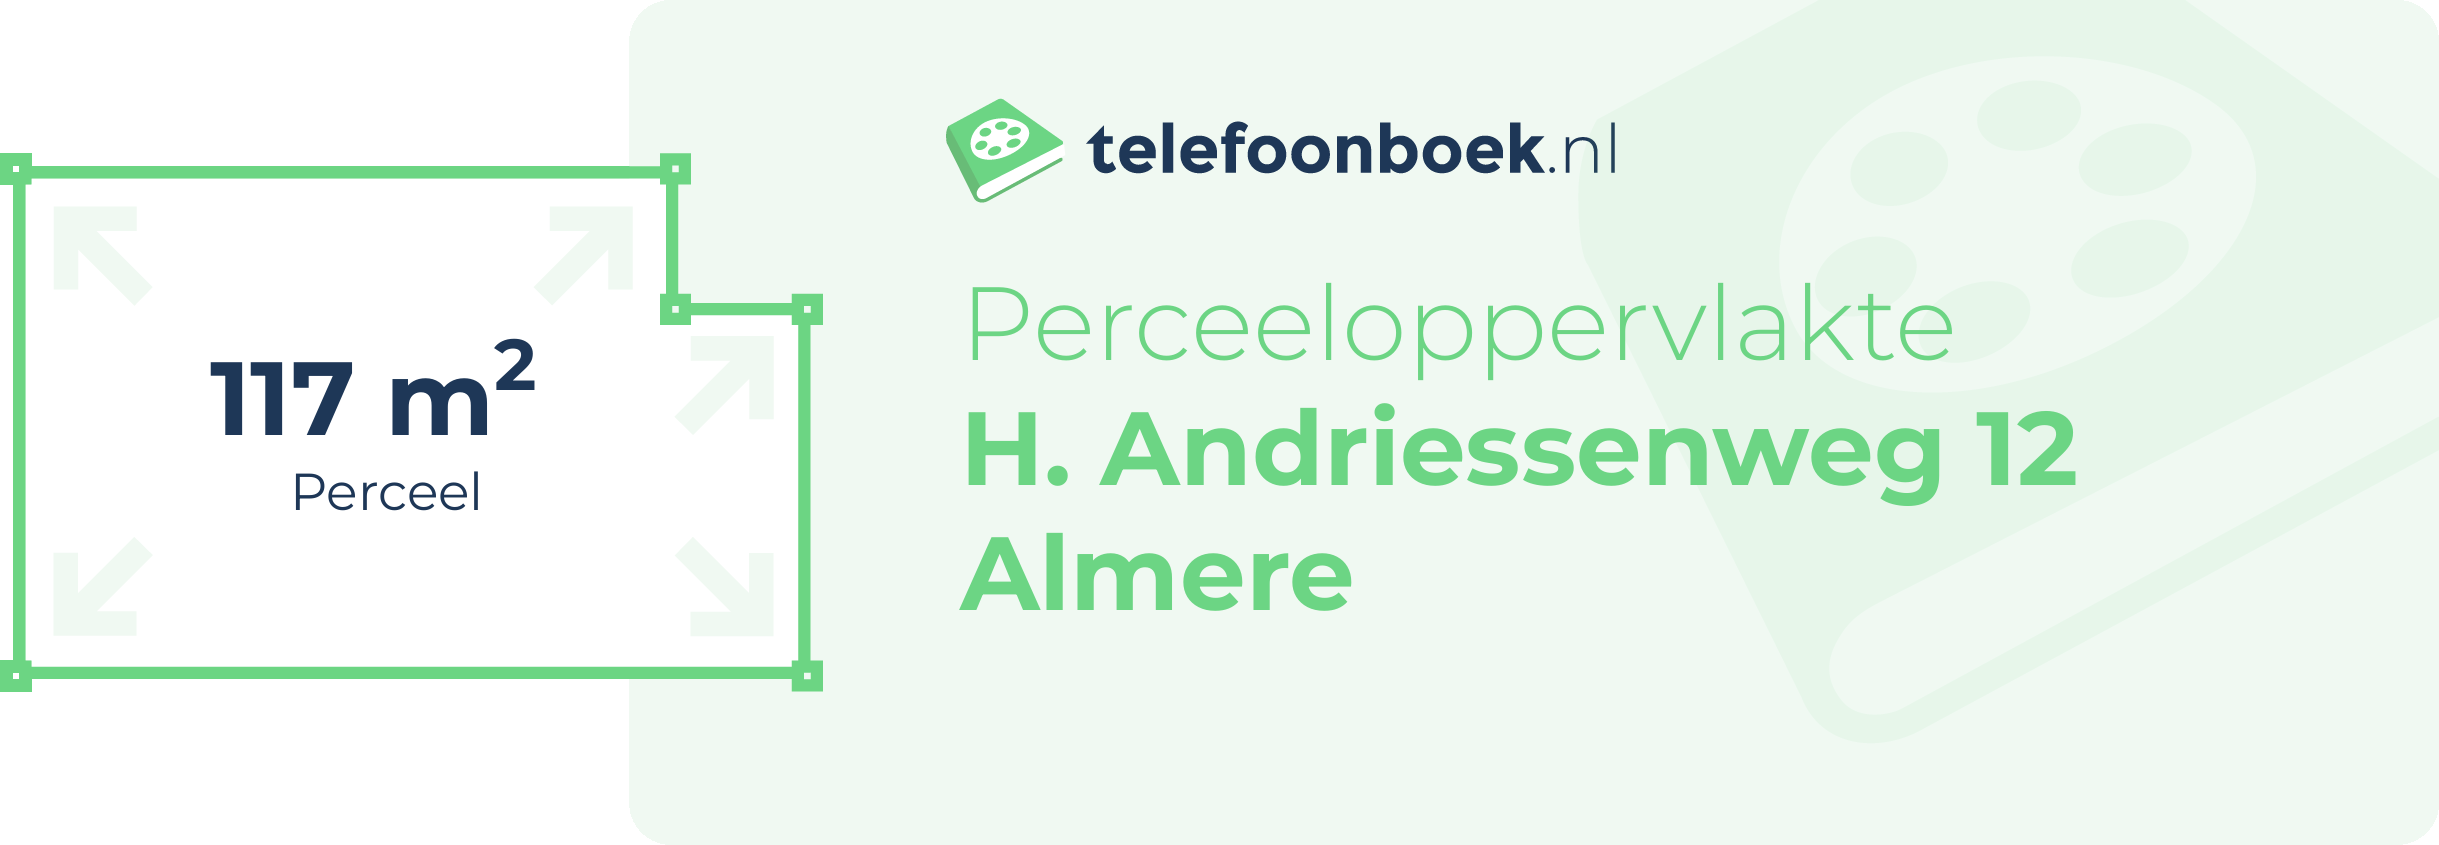 Perceeloppervlakte H. Andriessenweg 12 Almere